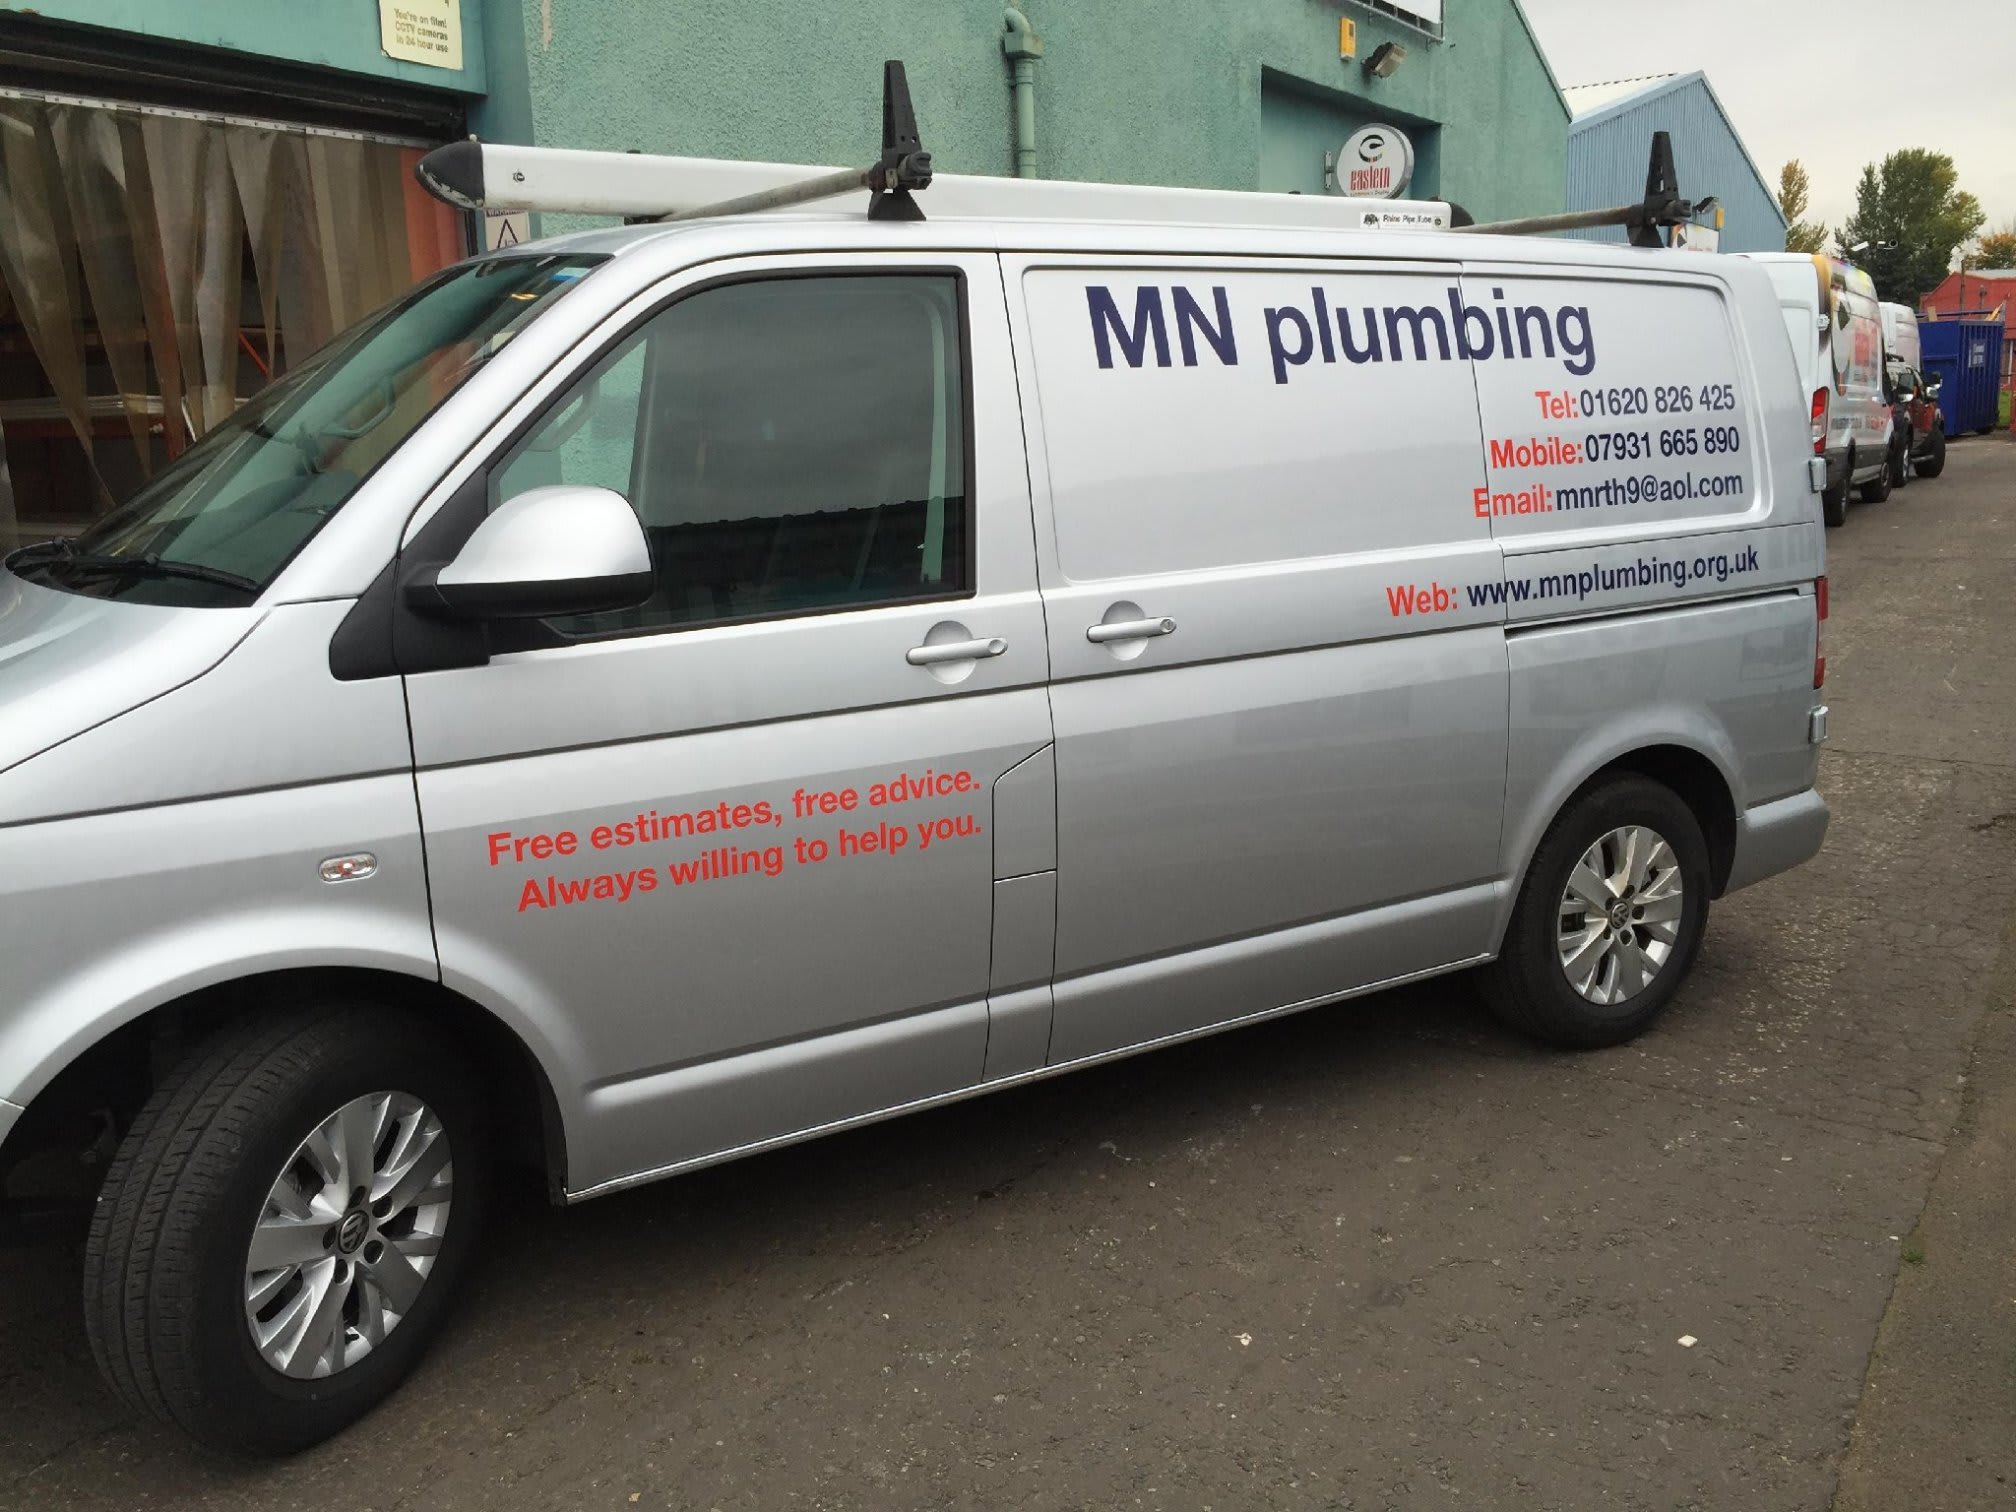 M&N Plumbing & Heating Ltd Tranent 01875 611829